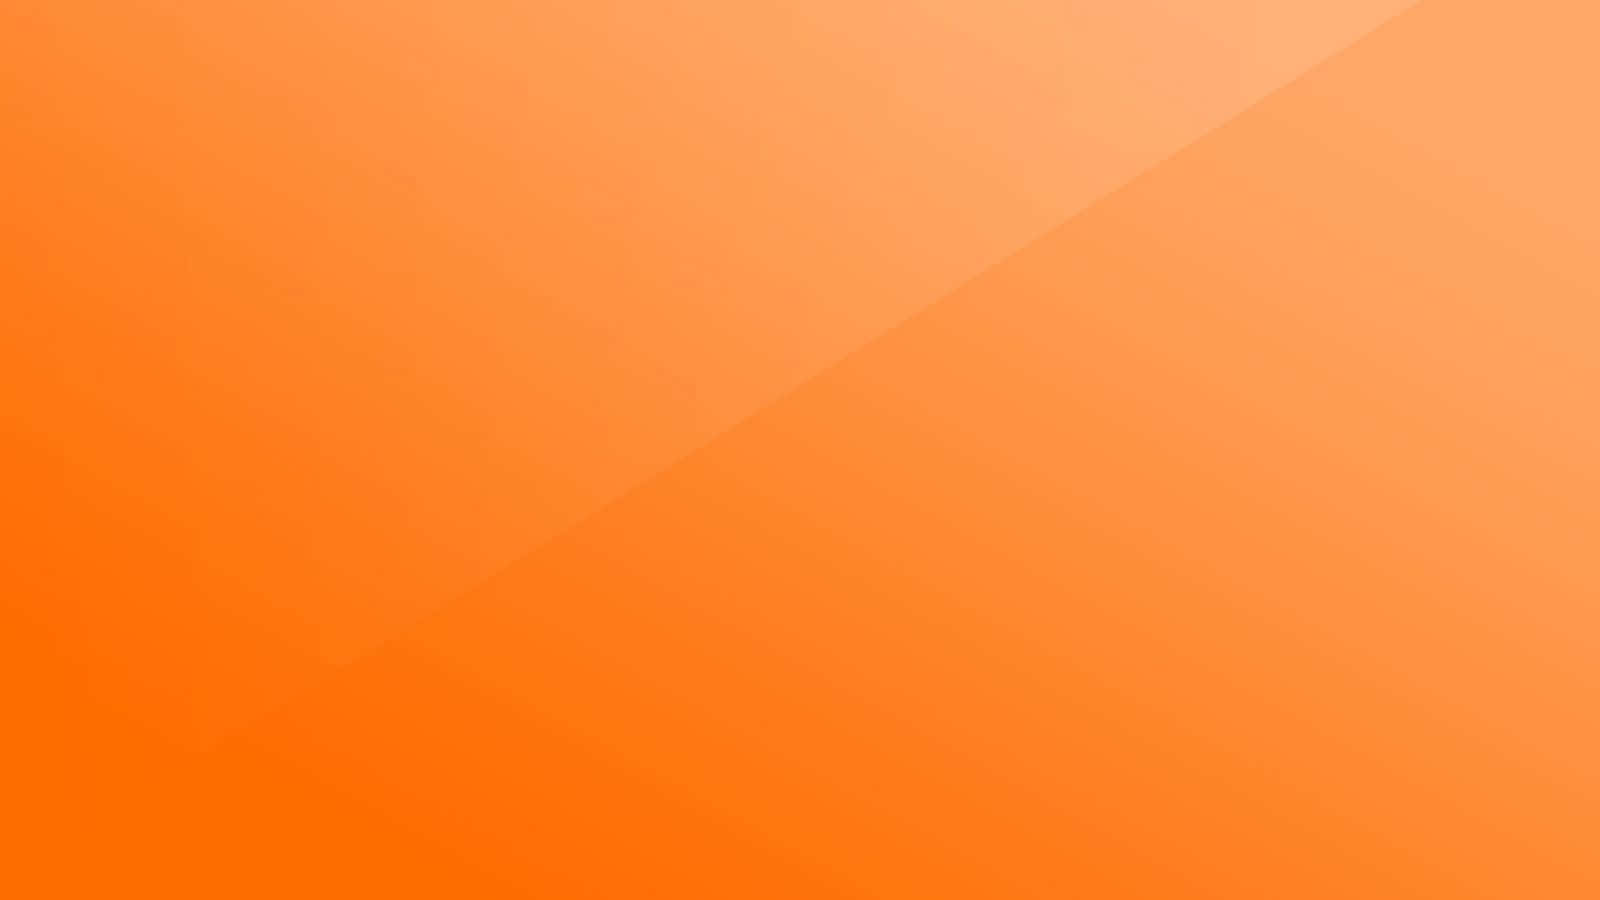 https://wallpapers.com/images/hd/light-orange-background-mywqd7b4j3zeu8s8.jpg